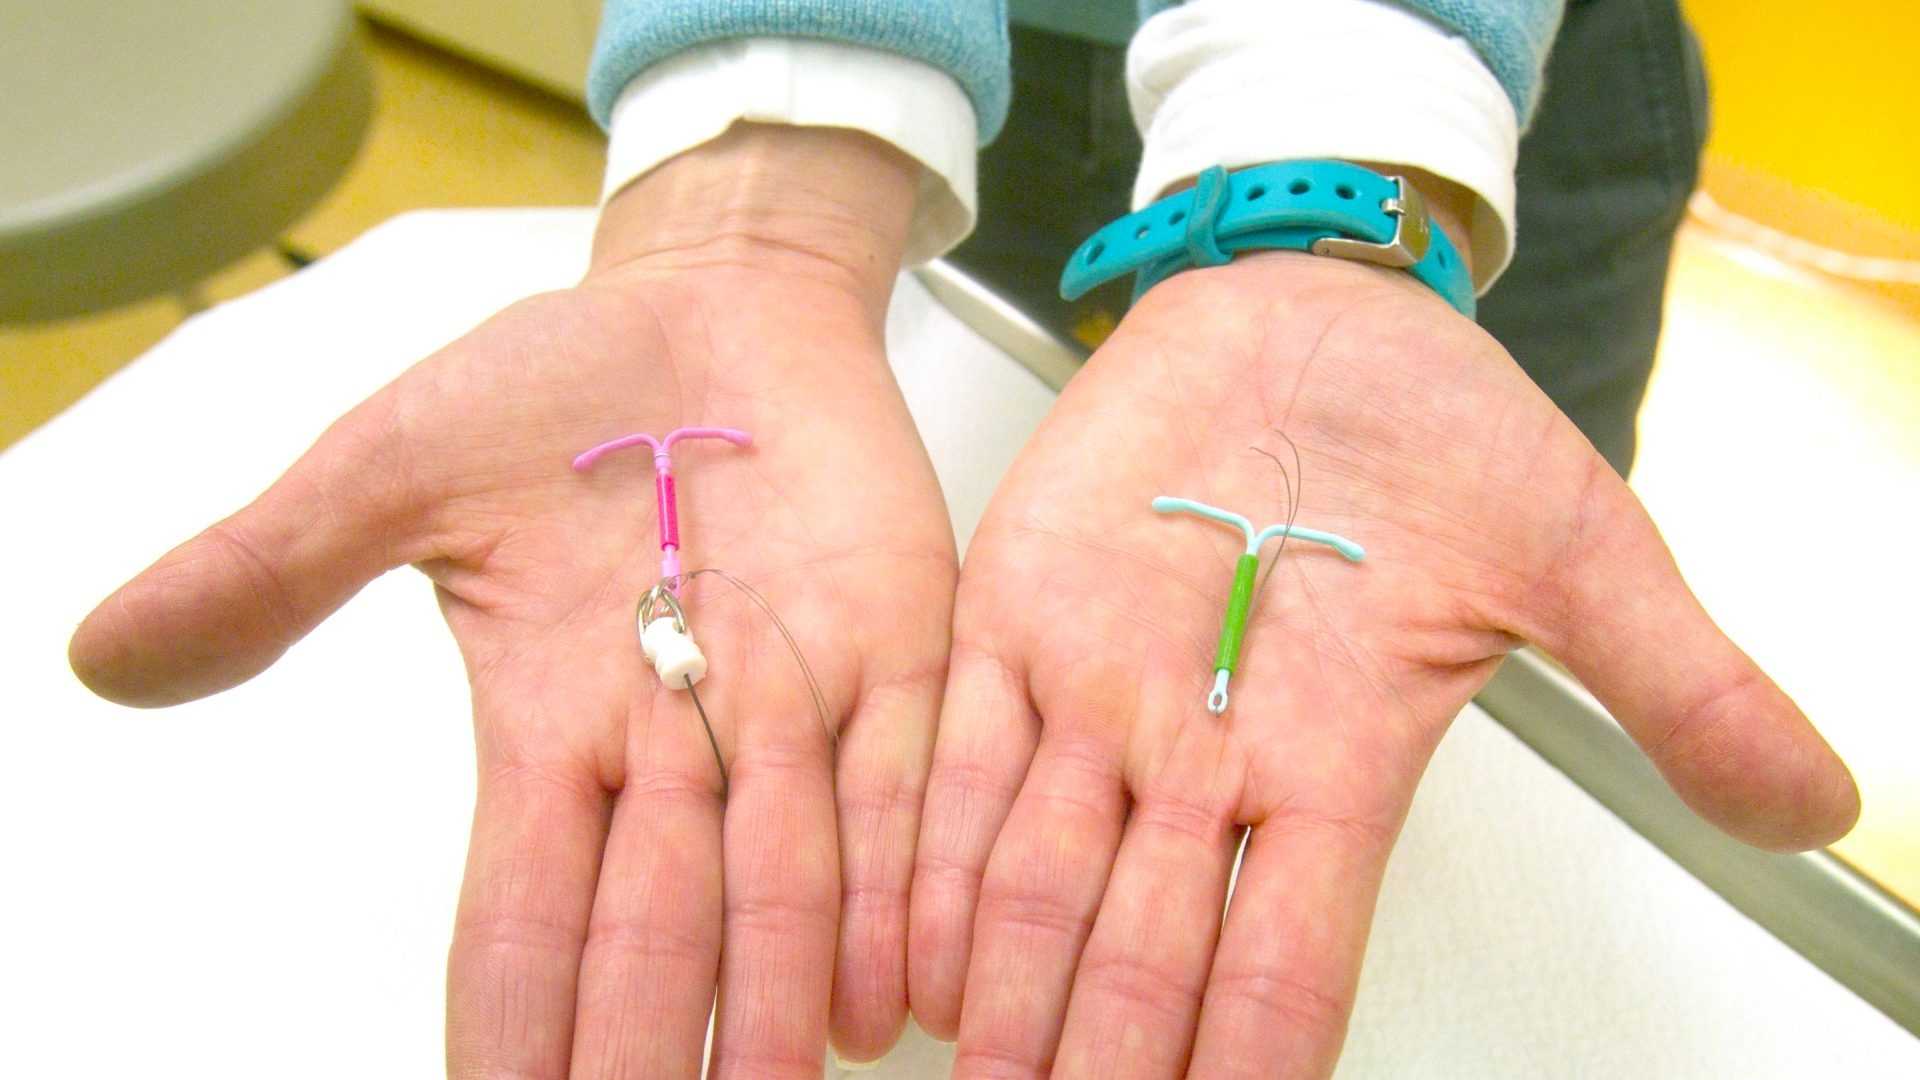 Dispositivos intrauterinos 